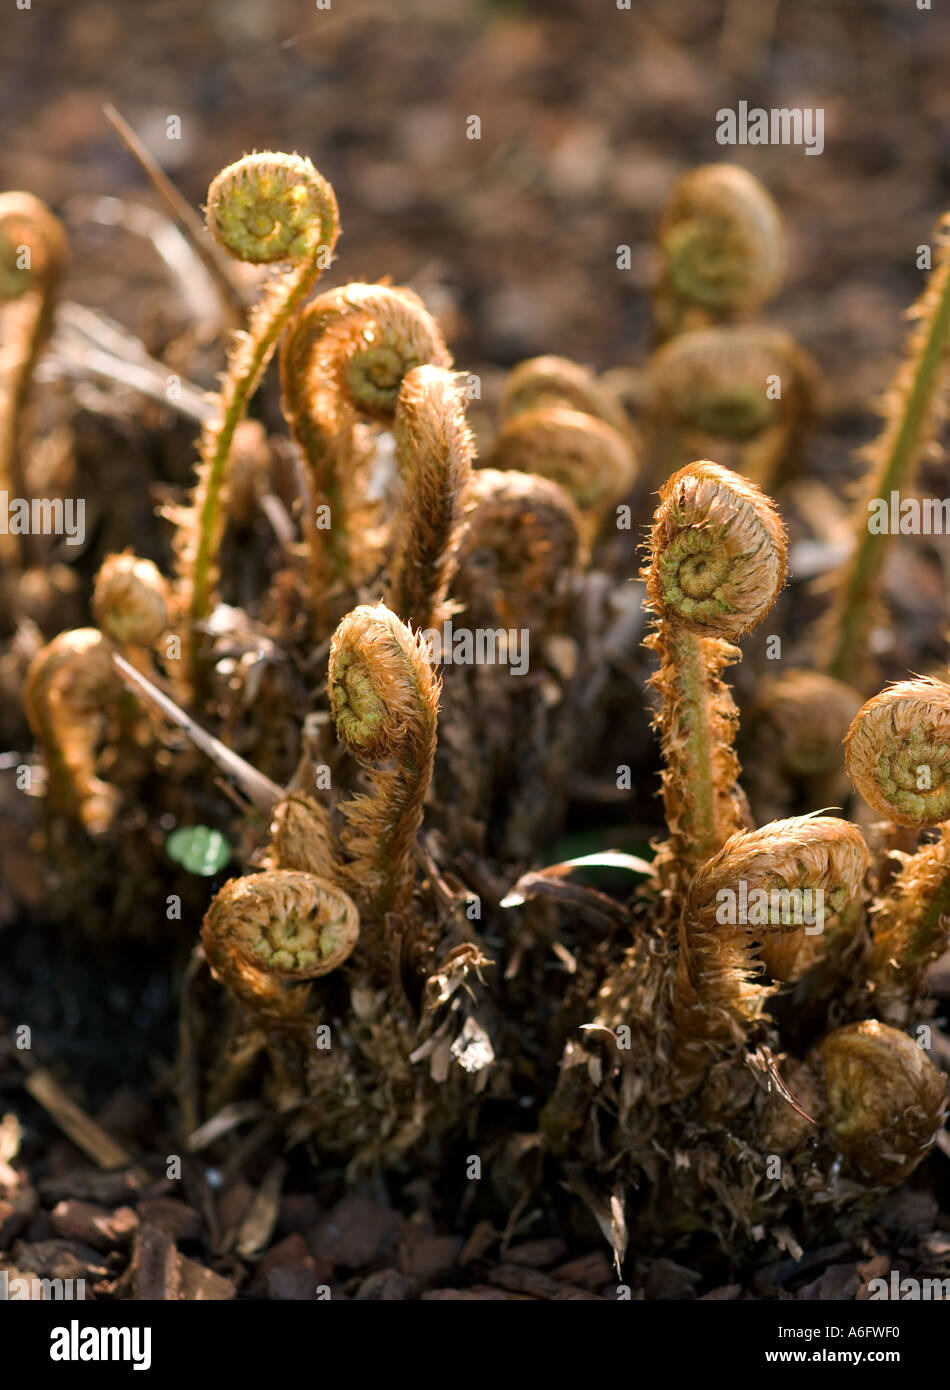 Dryopteris wallichiana or wood fern with new shoots Stock Photo